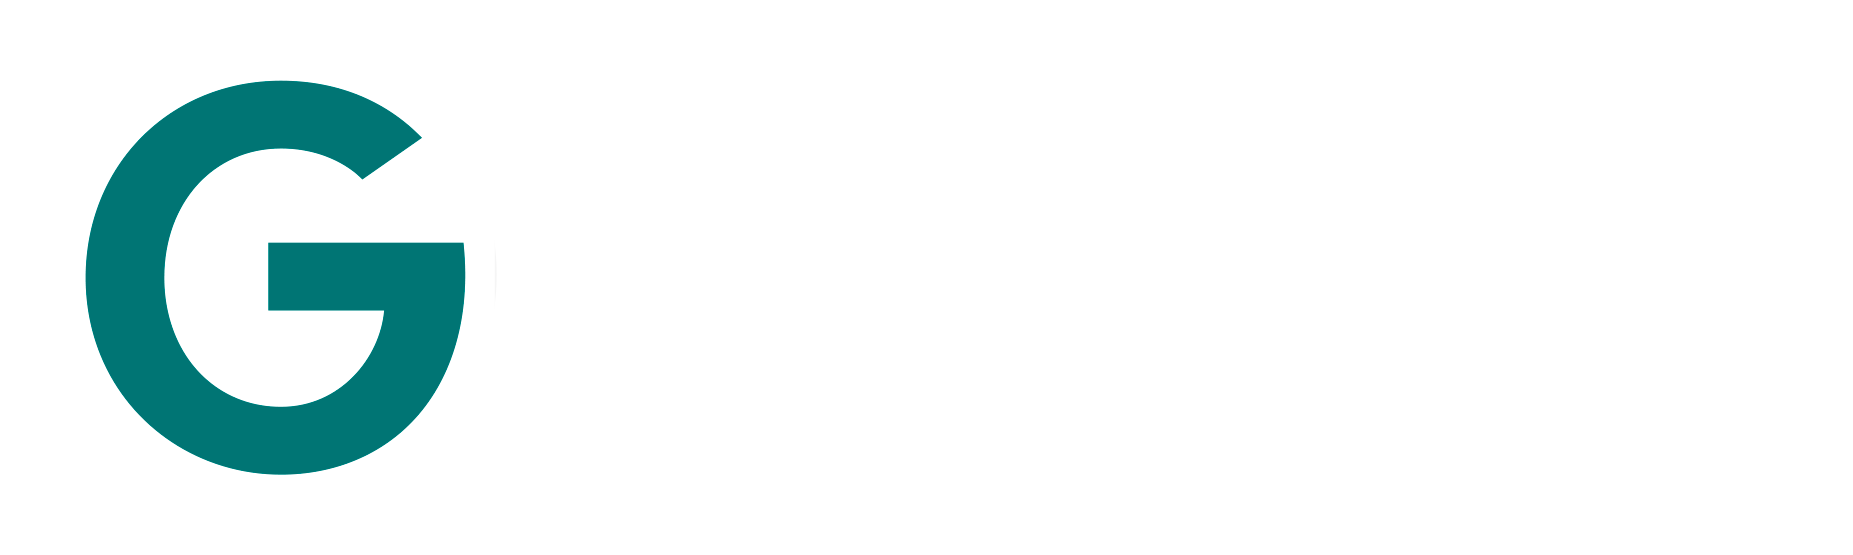 Giordano Lorenzo & Figli Impresa Edile - Altamura - Bari